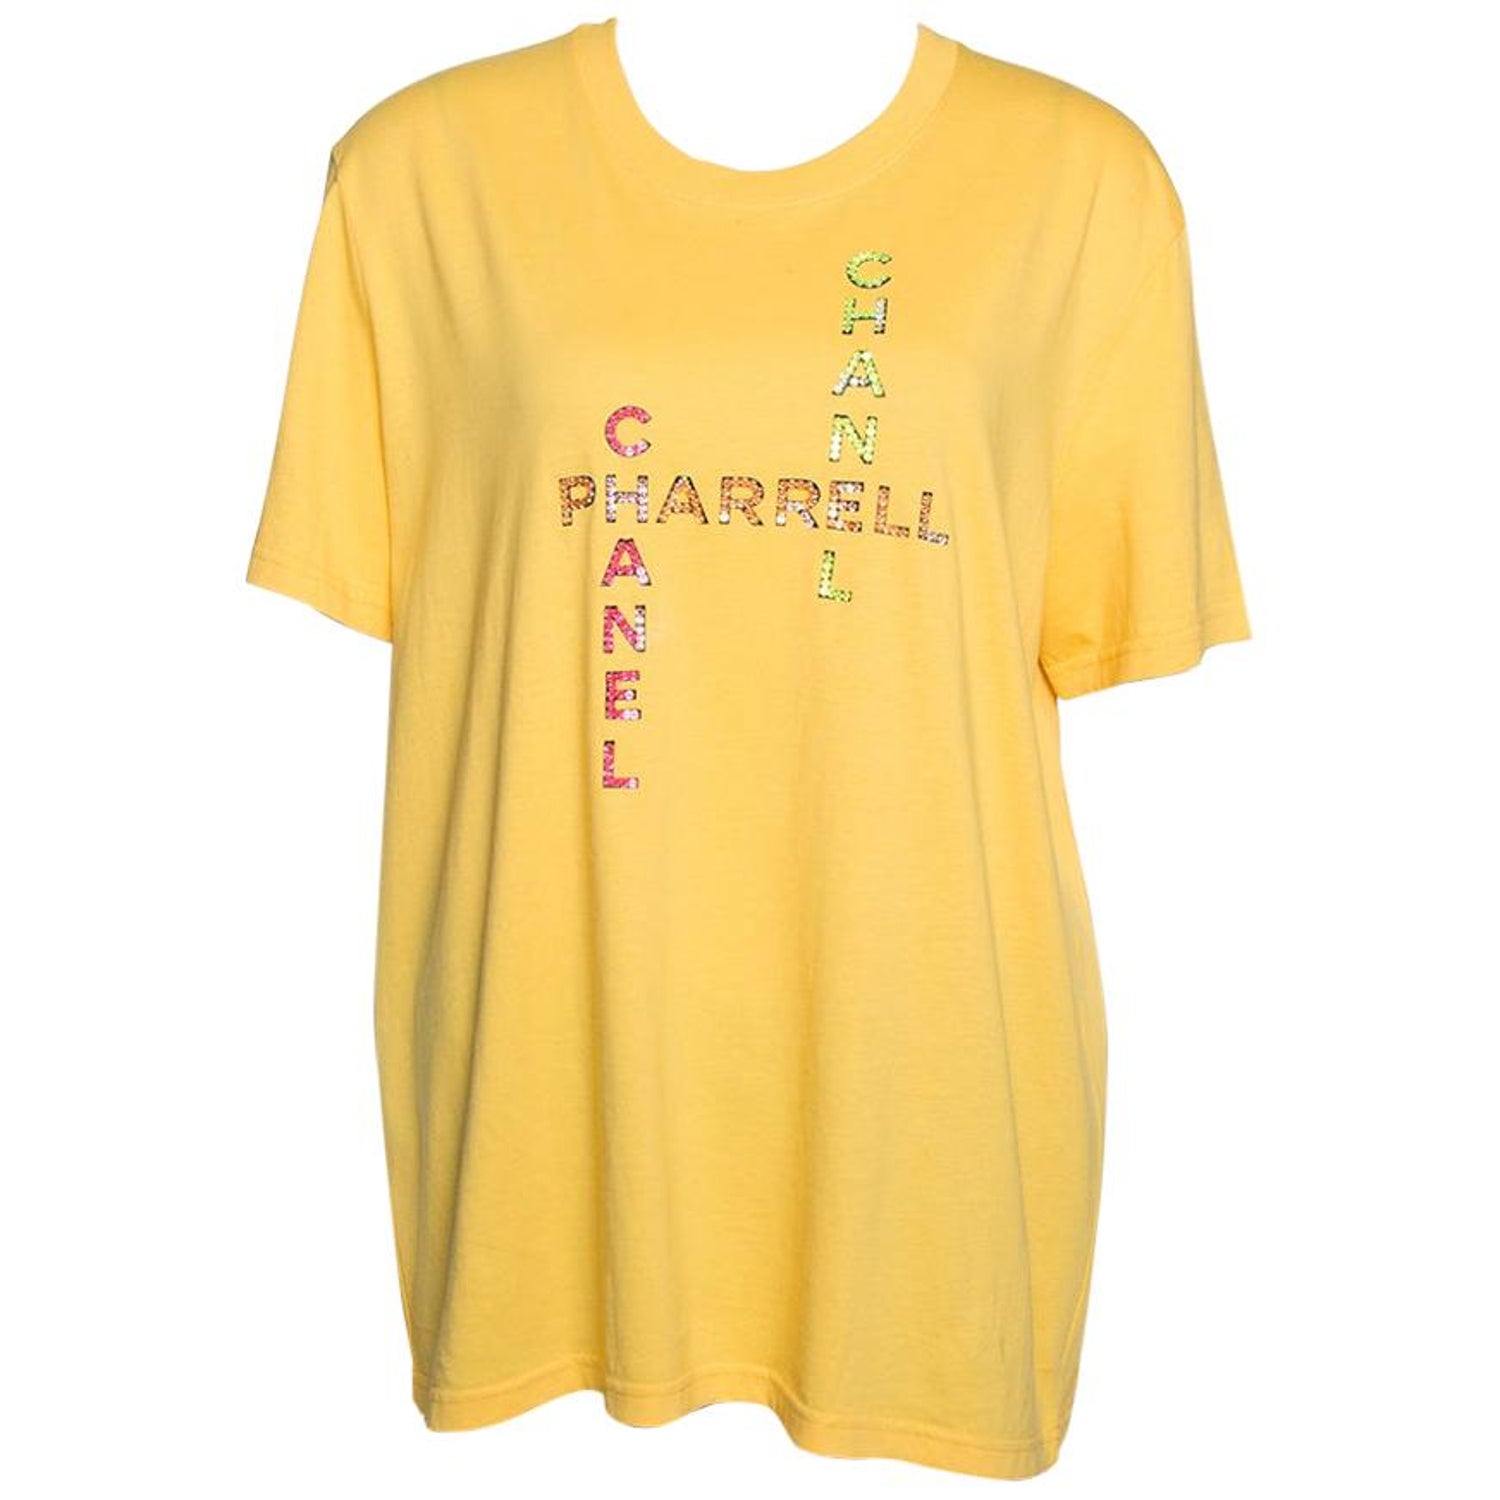 Chanel X Pharrell - 5 For Sale on 1stDibs